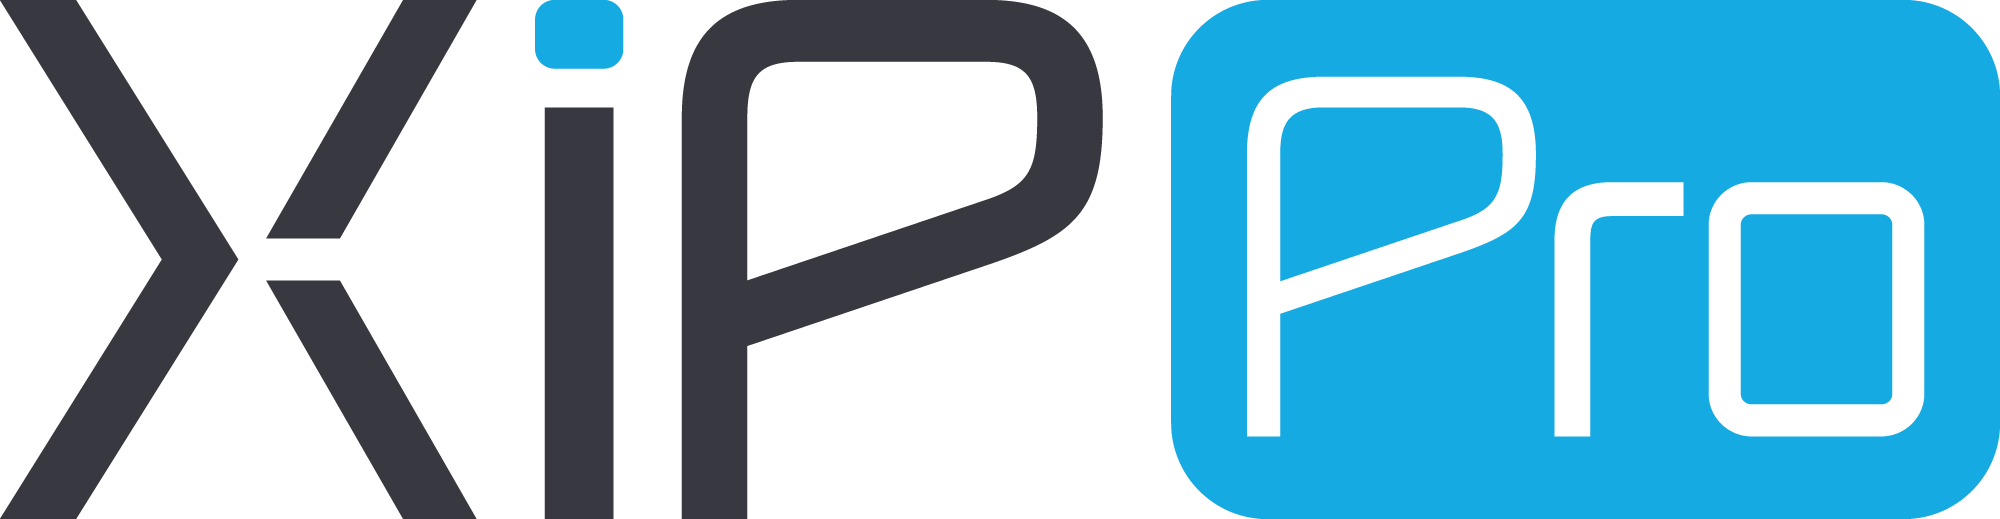 XiP Pro Logo